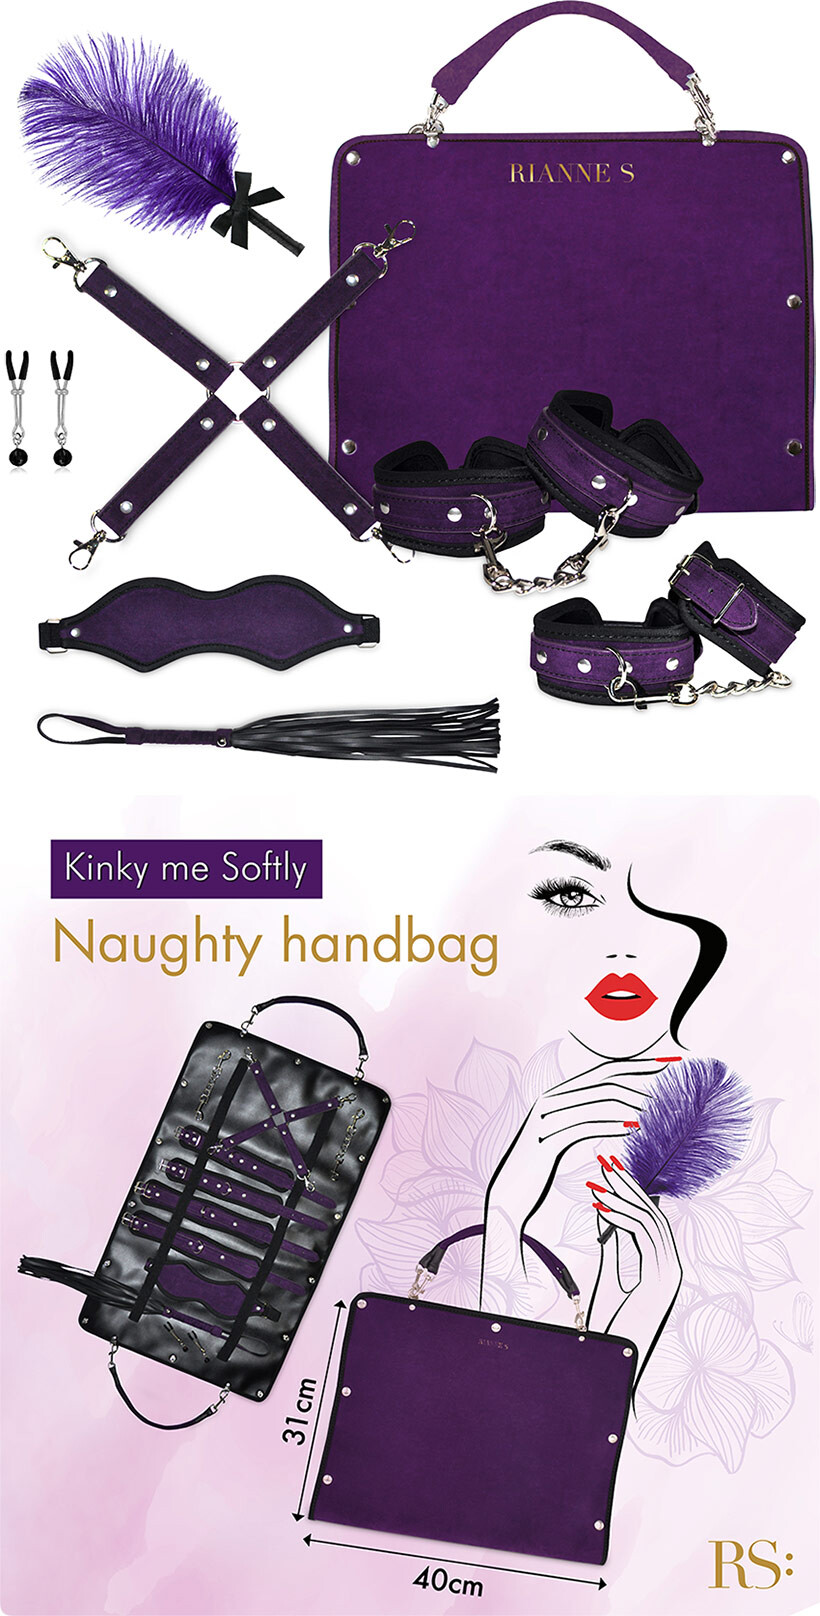 Rianne S Kinky Me Softly bag with bondage accessories - Purple